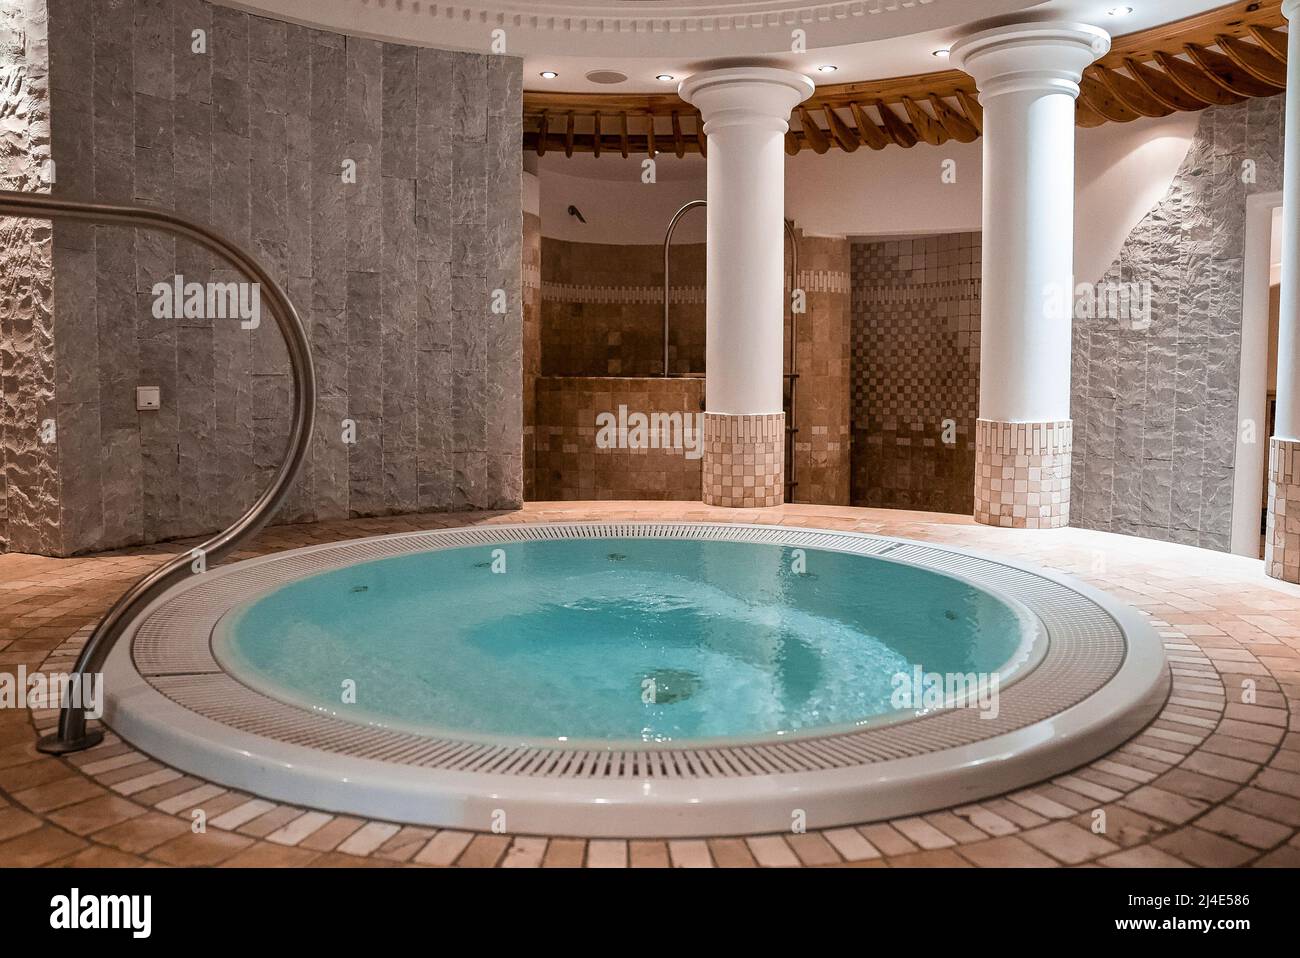 Round jacuzzi in modern bathroom with elegant style in luxurious ski resort Stock Photo